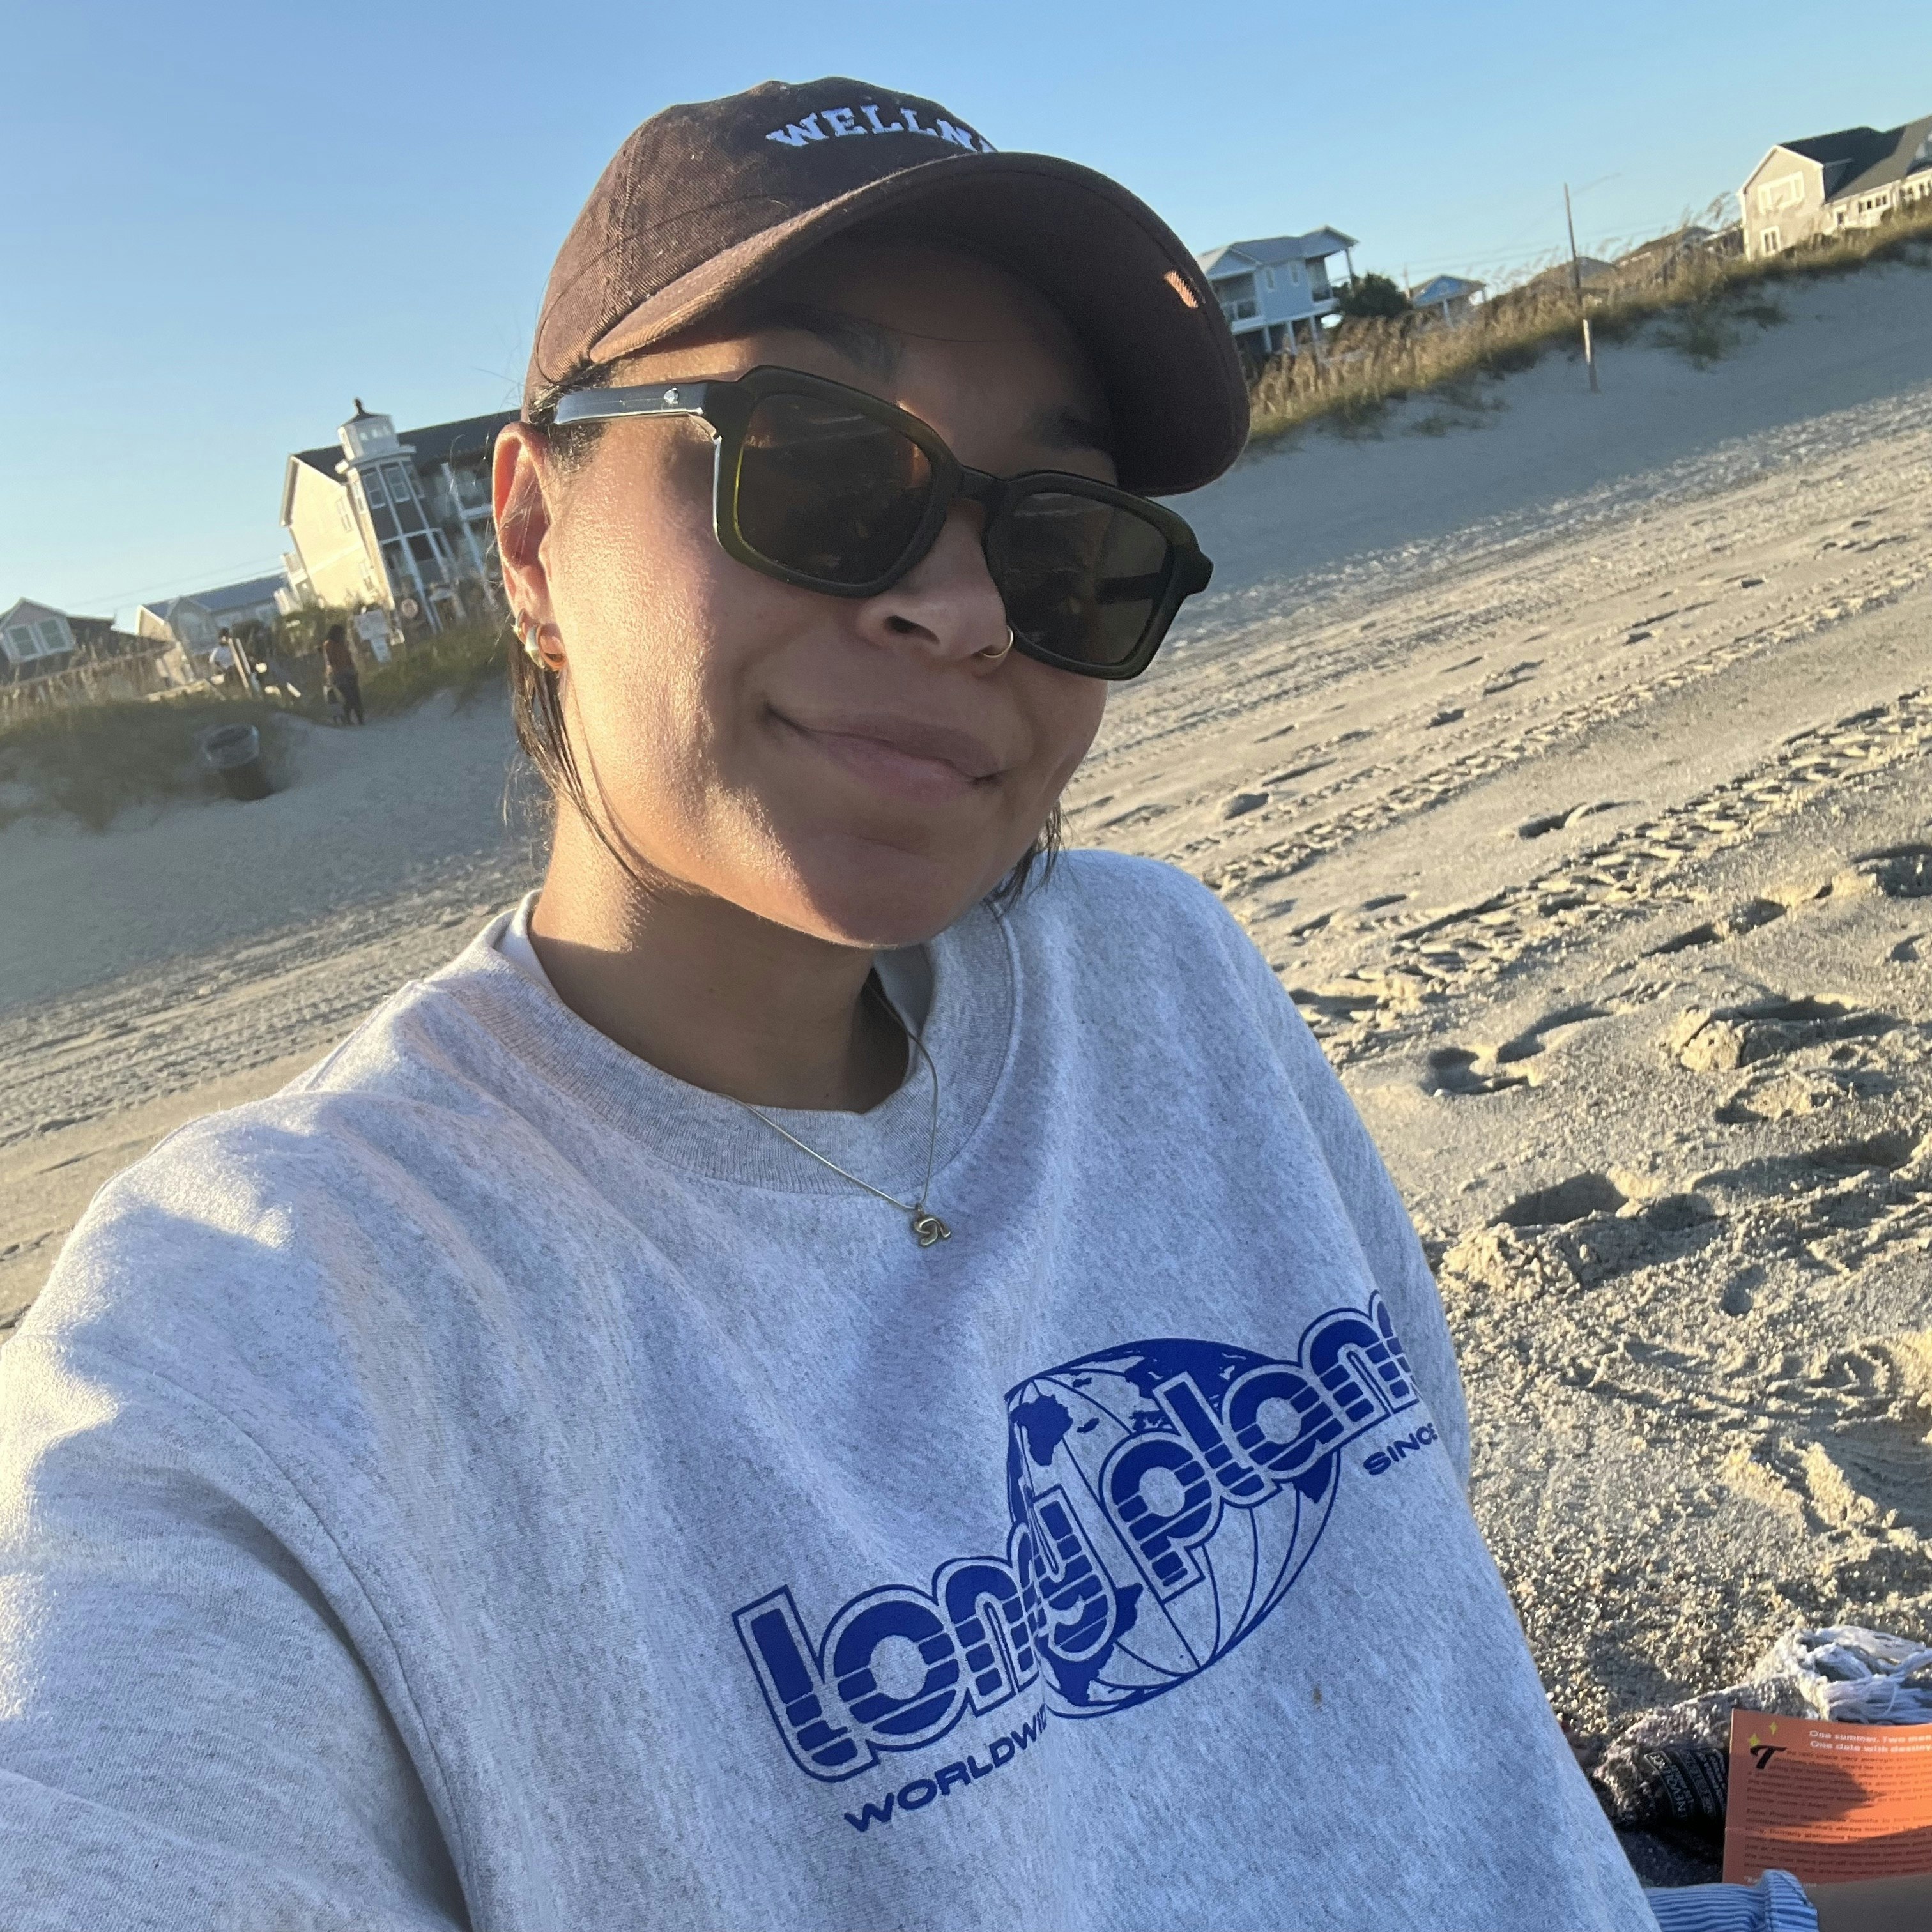 Rachel Lewis taking a selfie on the sands at Kure Beach, North Carolina